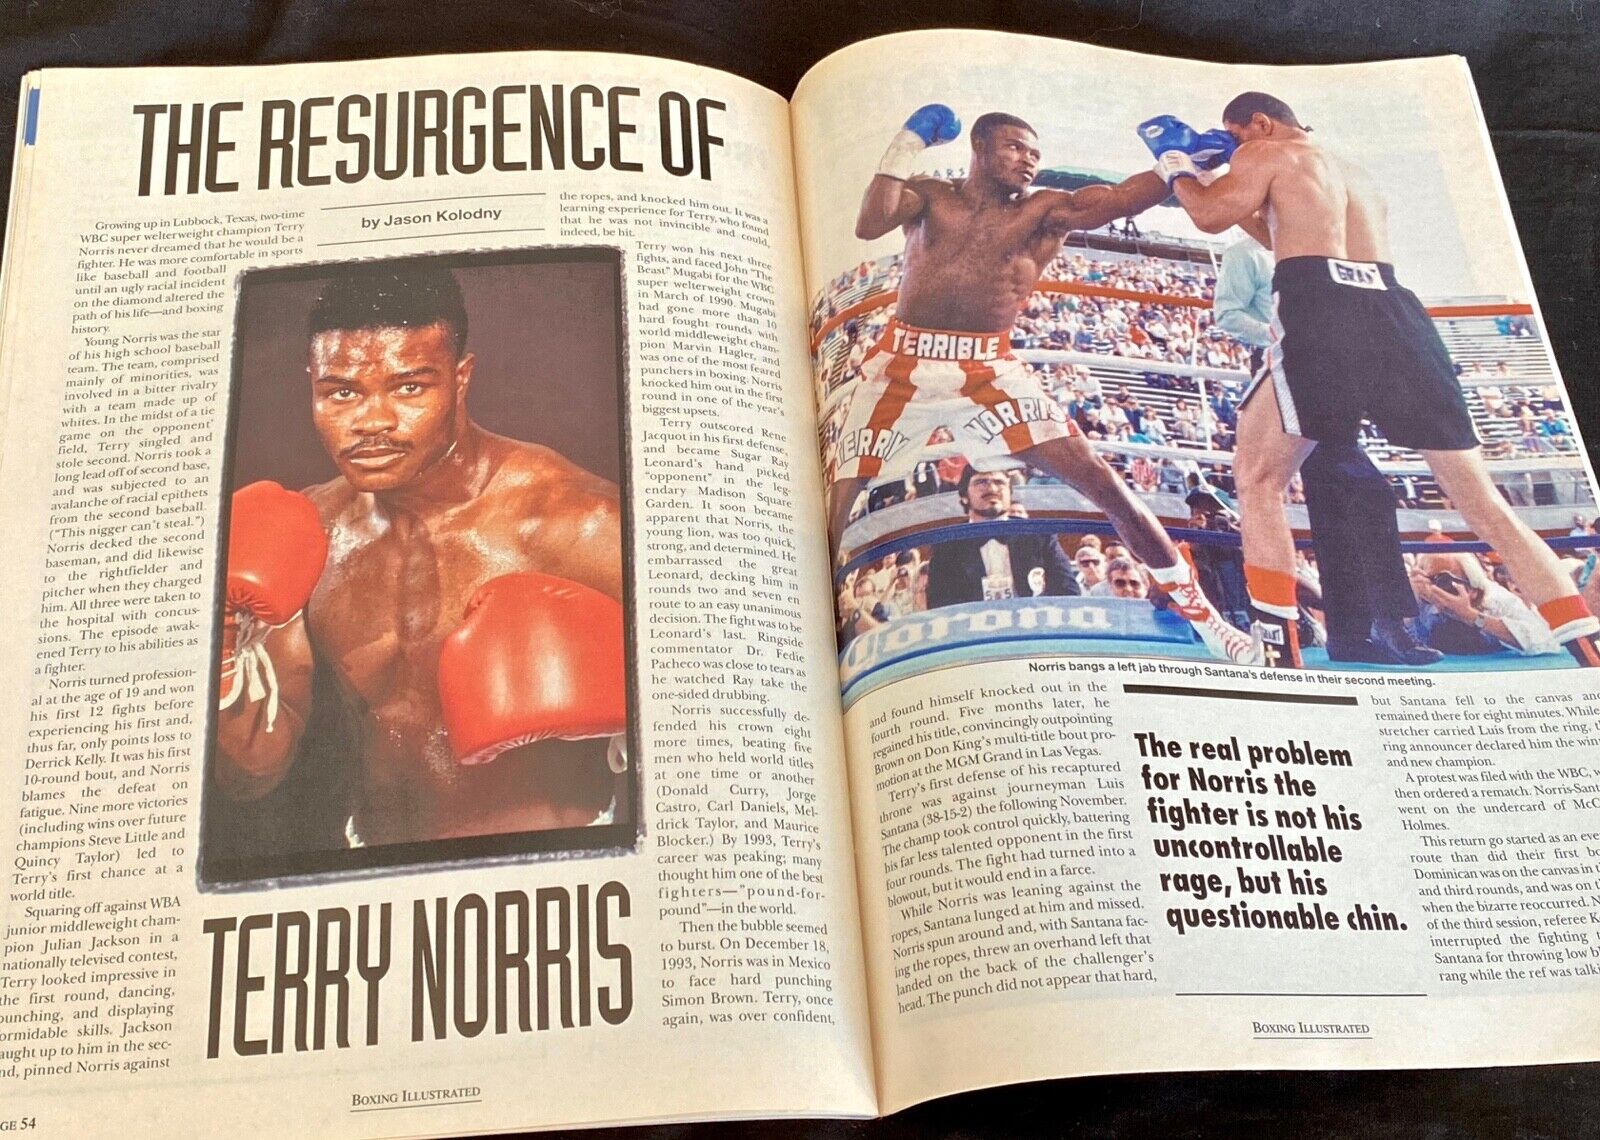 OSCAR DELA HOYA "FIGHER OF THE YEAR"- BOXING DIGEST (2/96) + BUDWEISER PROMO Boxing Digest & Budweiser - фотография #11